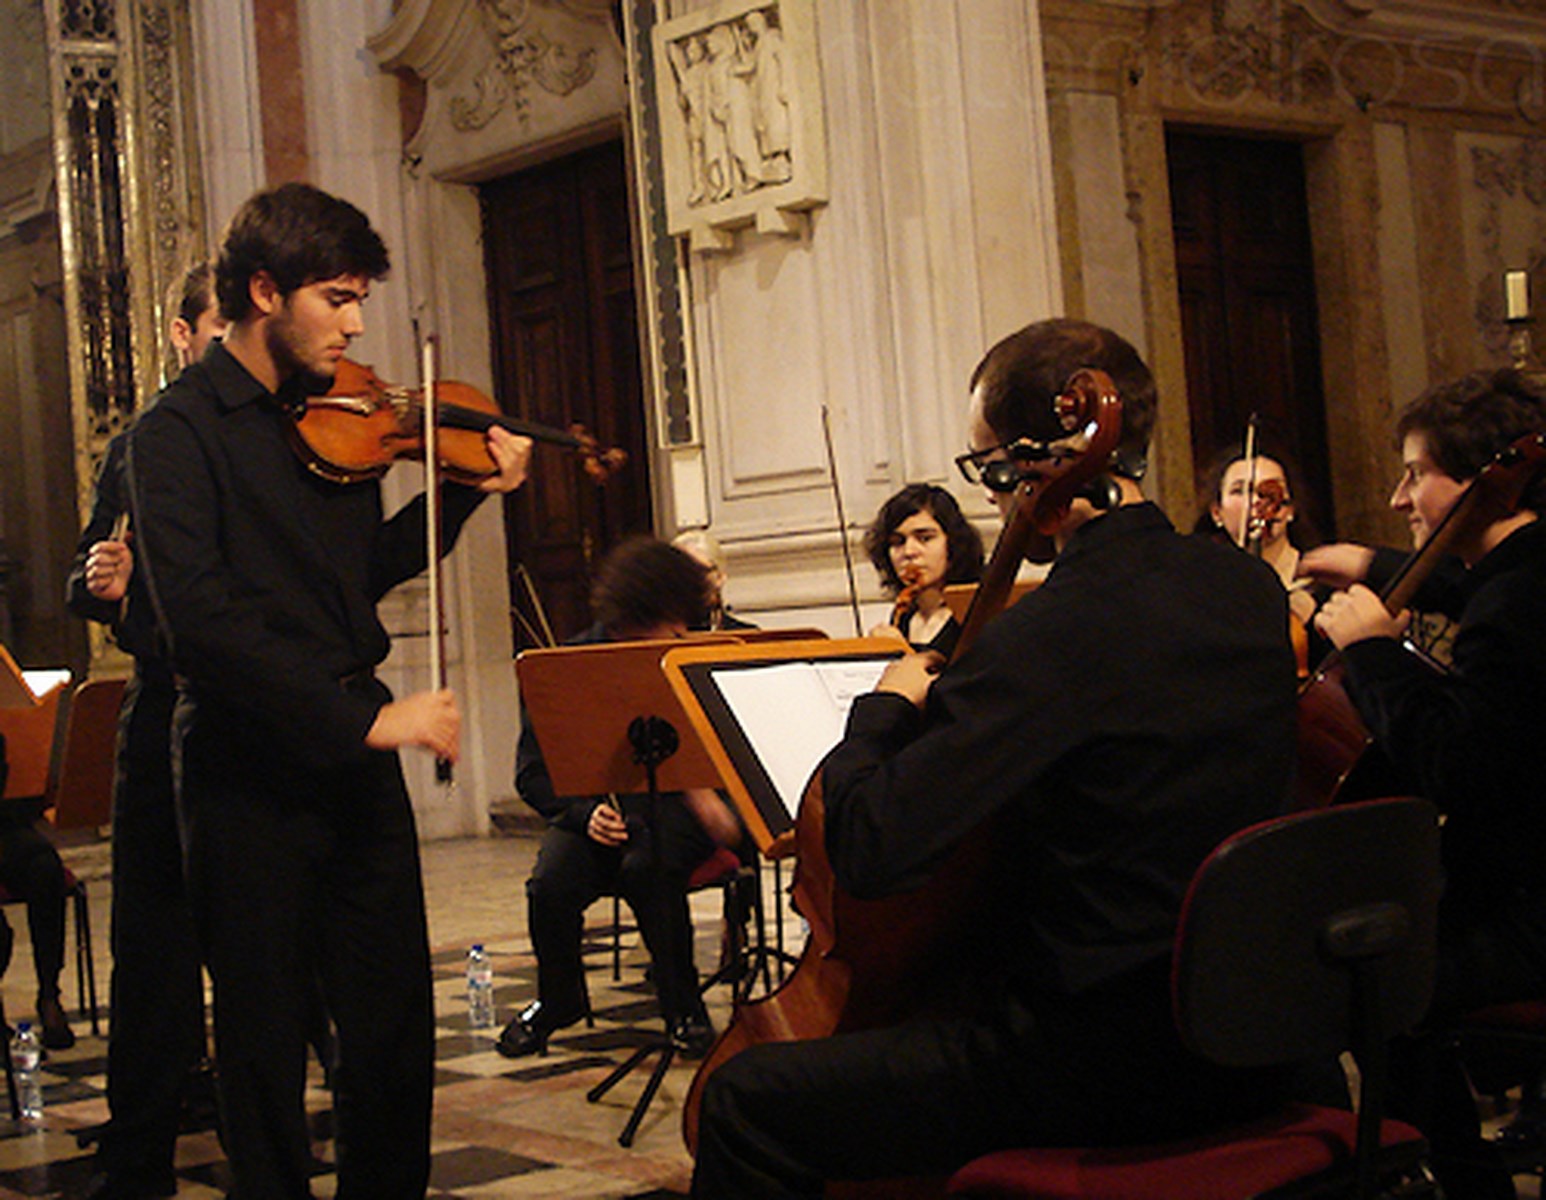 camerata da orquestra sinfonica juvenil igreja de sao nicolau lisboa lisbon portugal musica classica igreja church classical concert nicholas violin.jpg